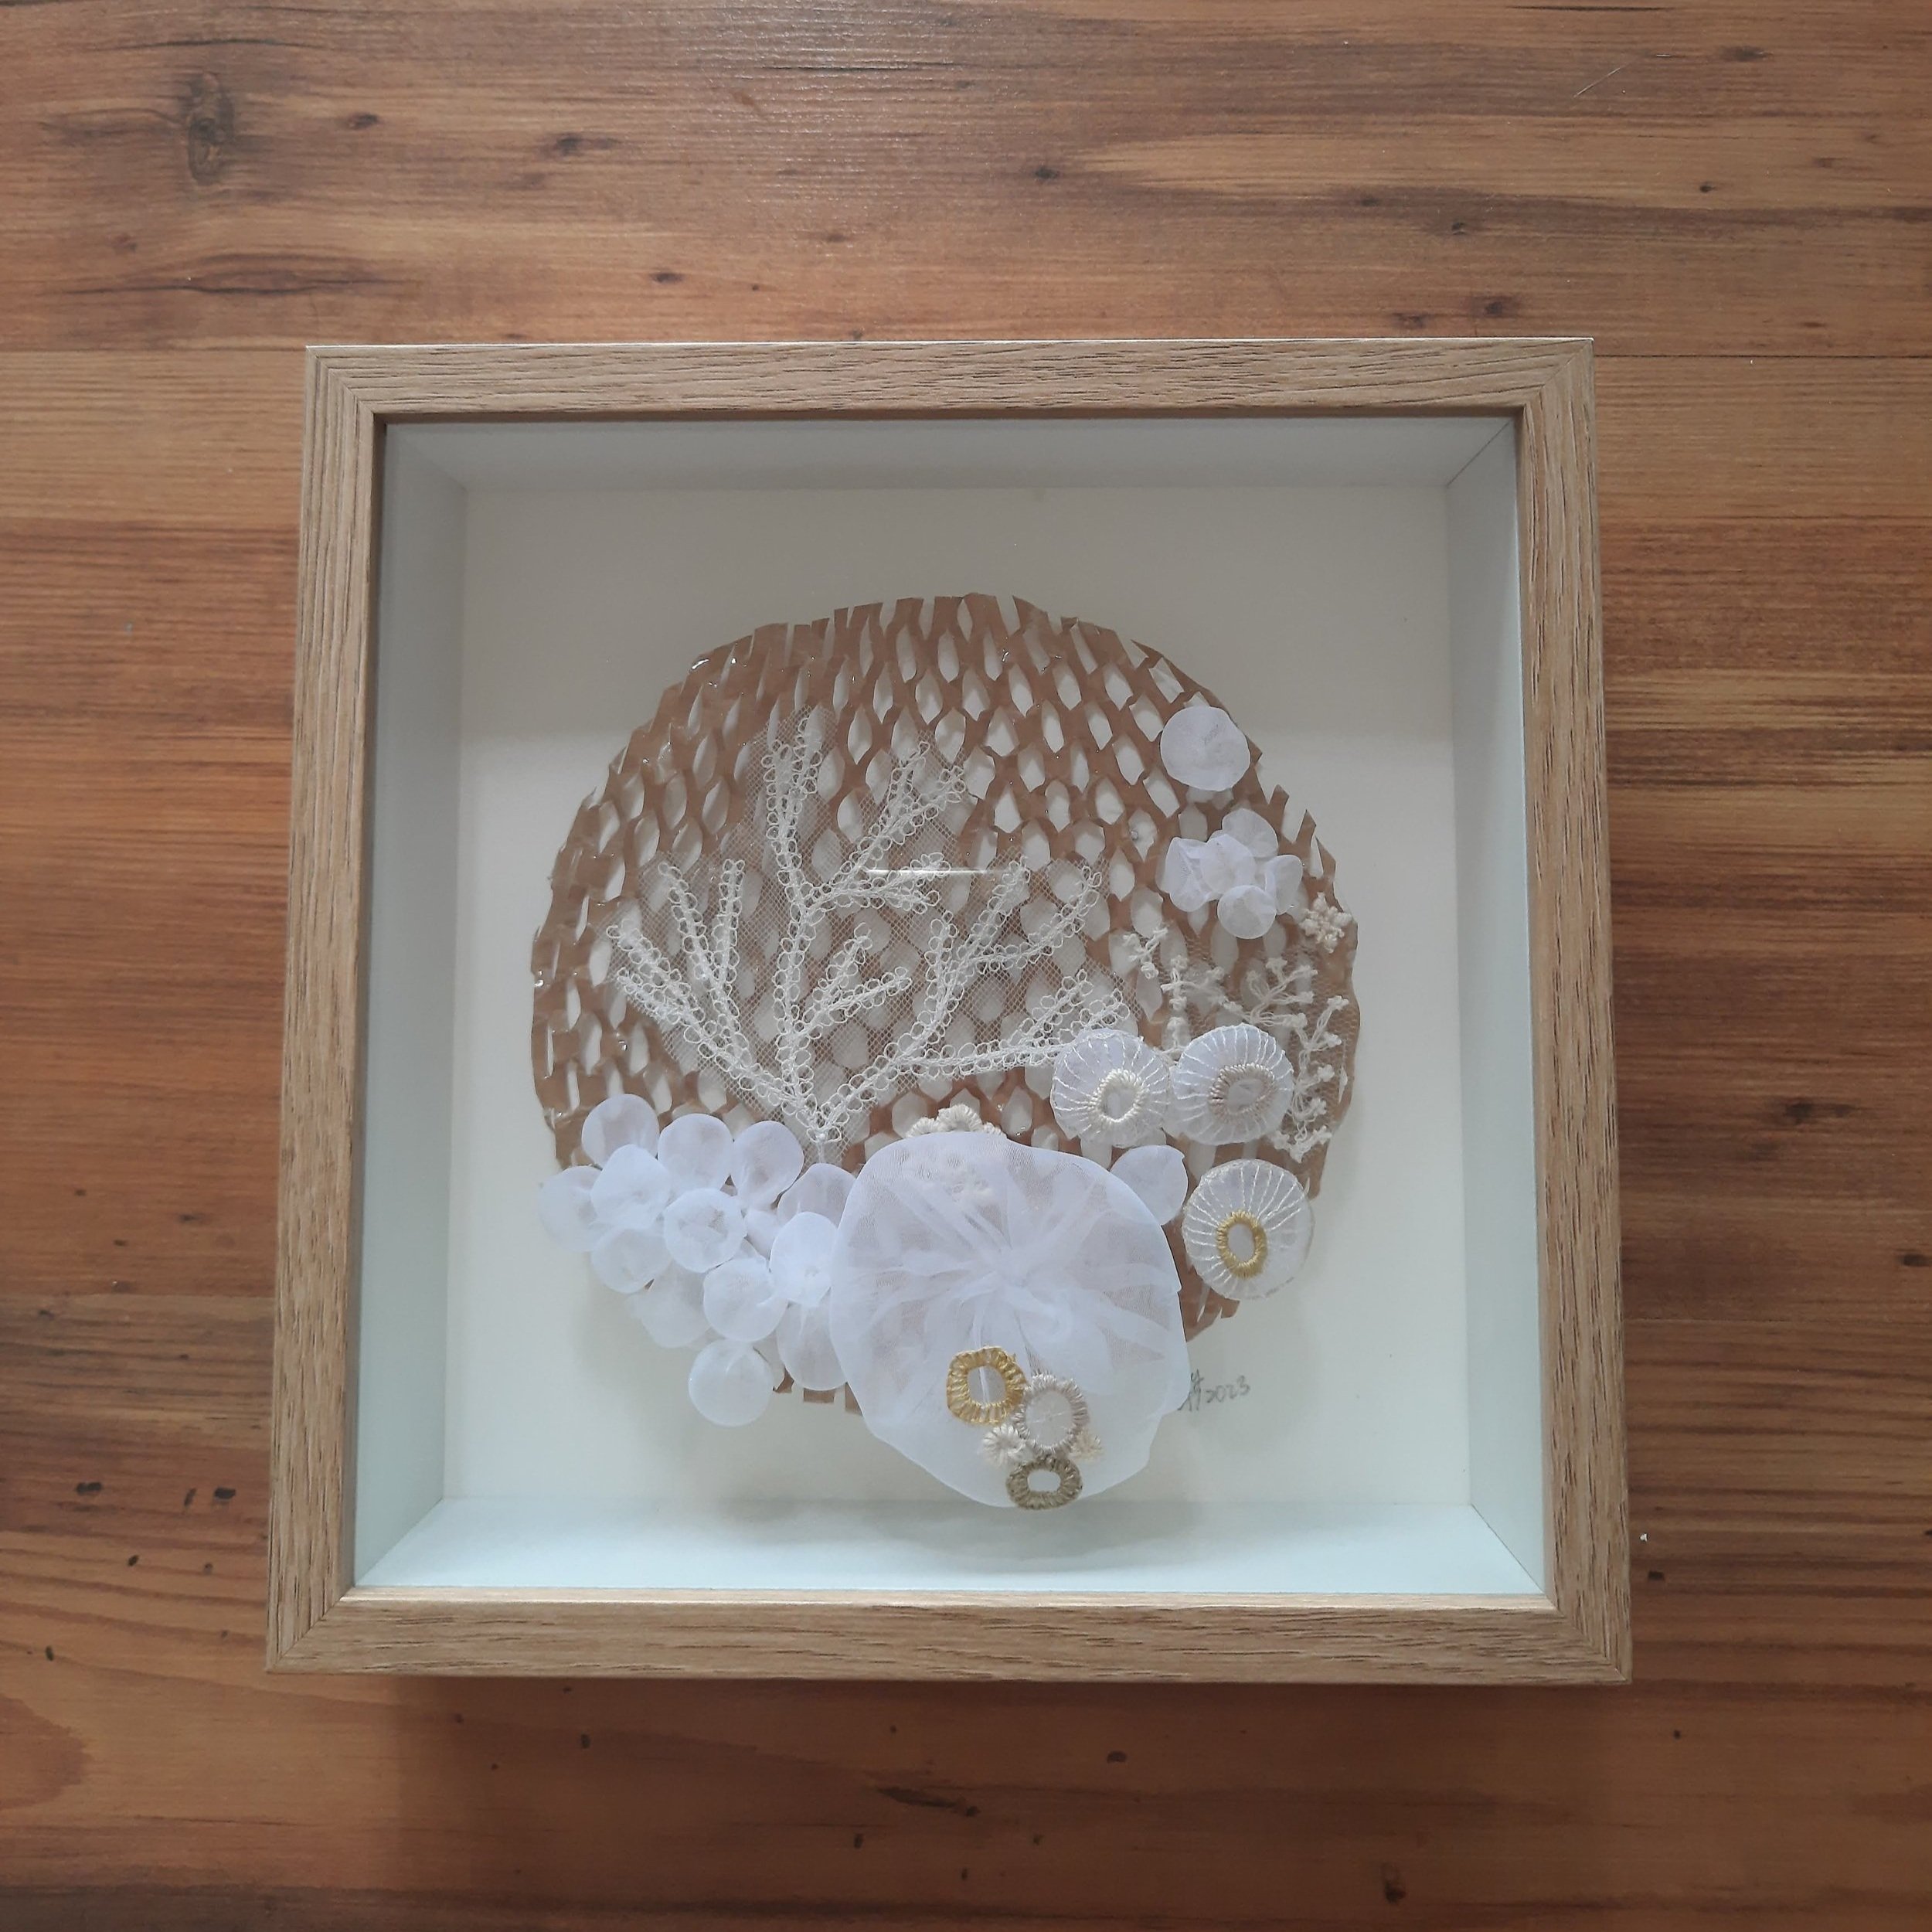 Coral textile art by Agatha 'agy'